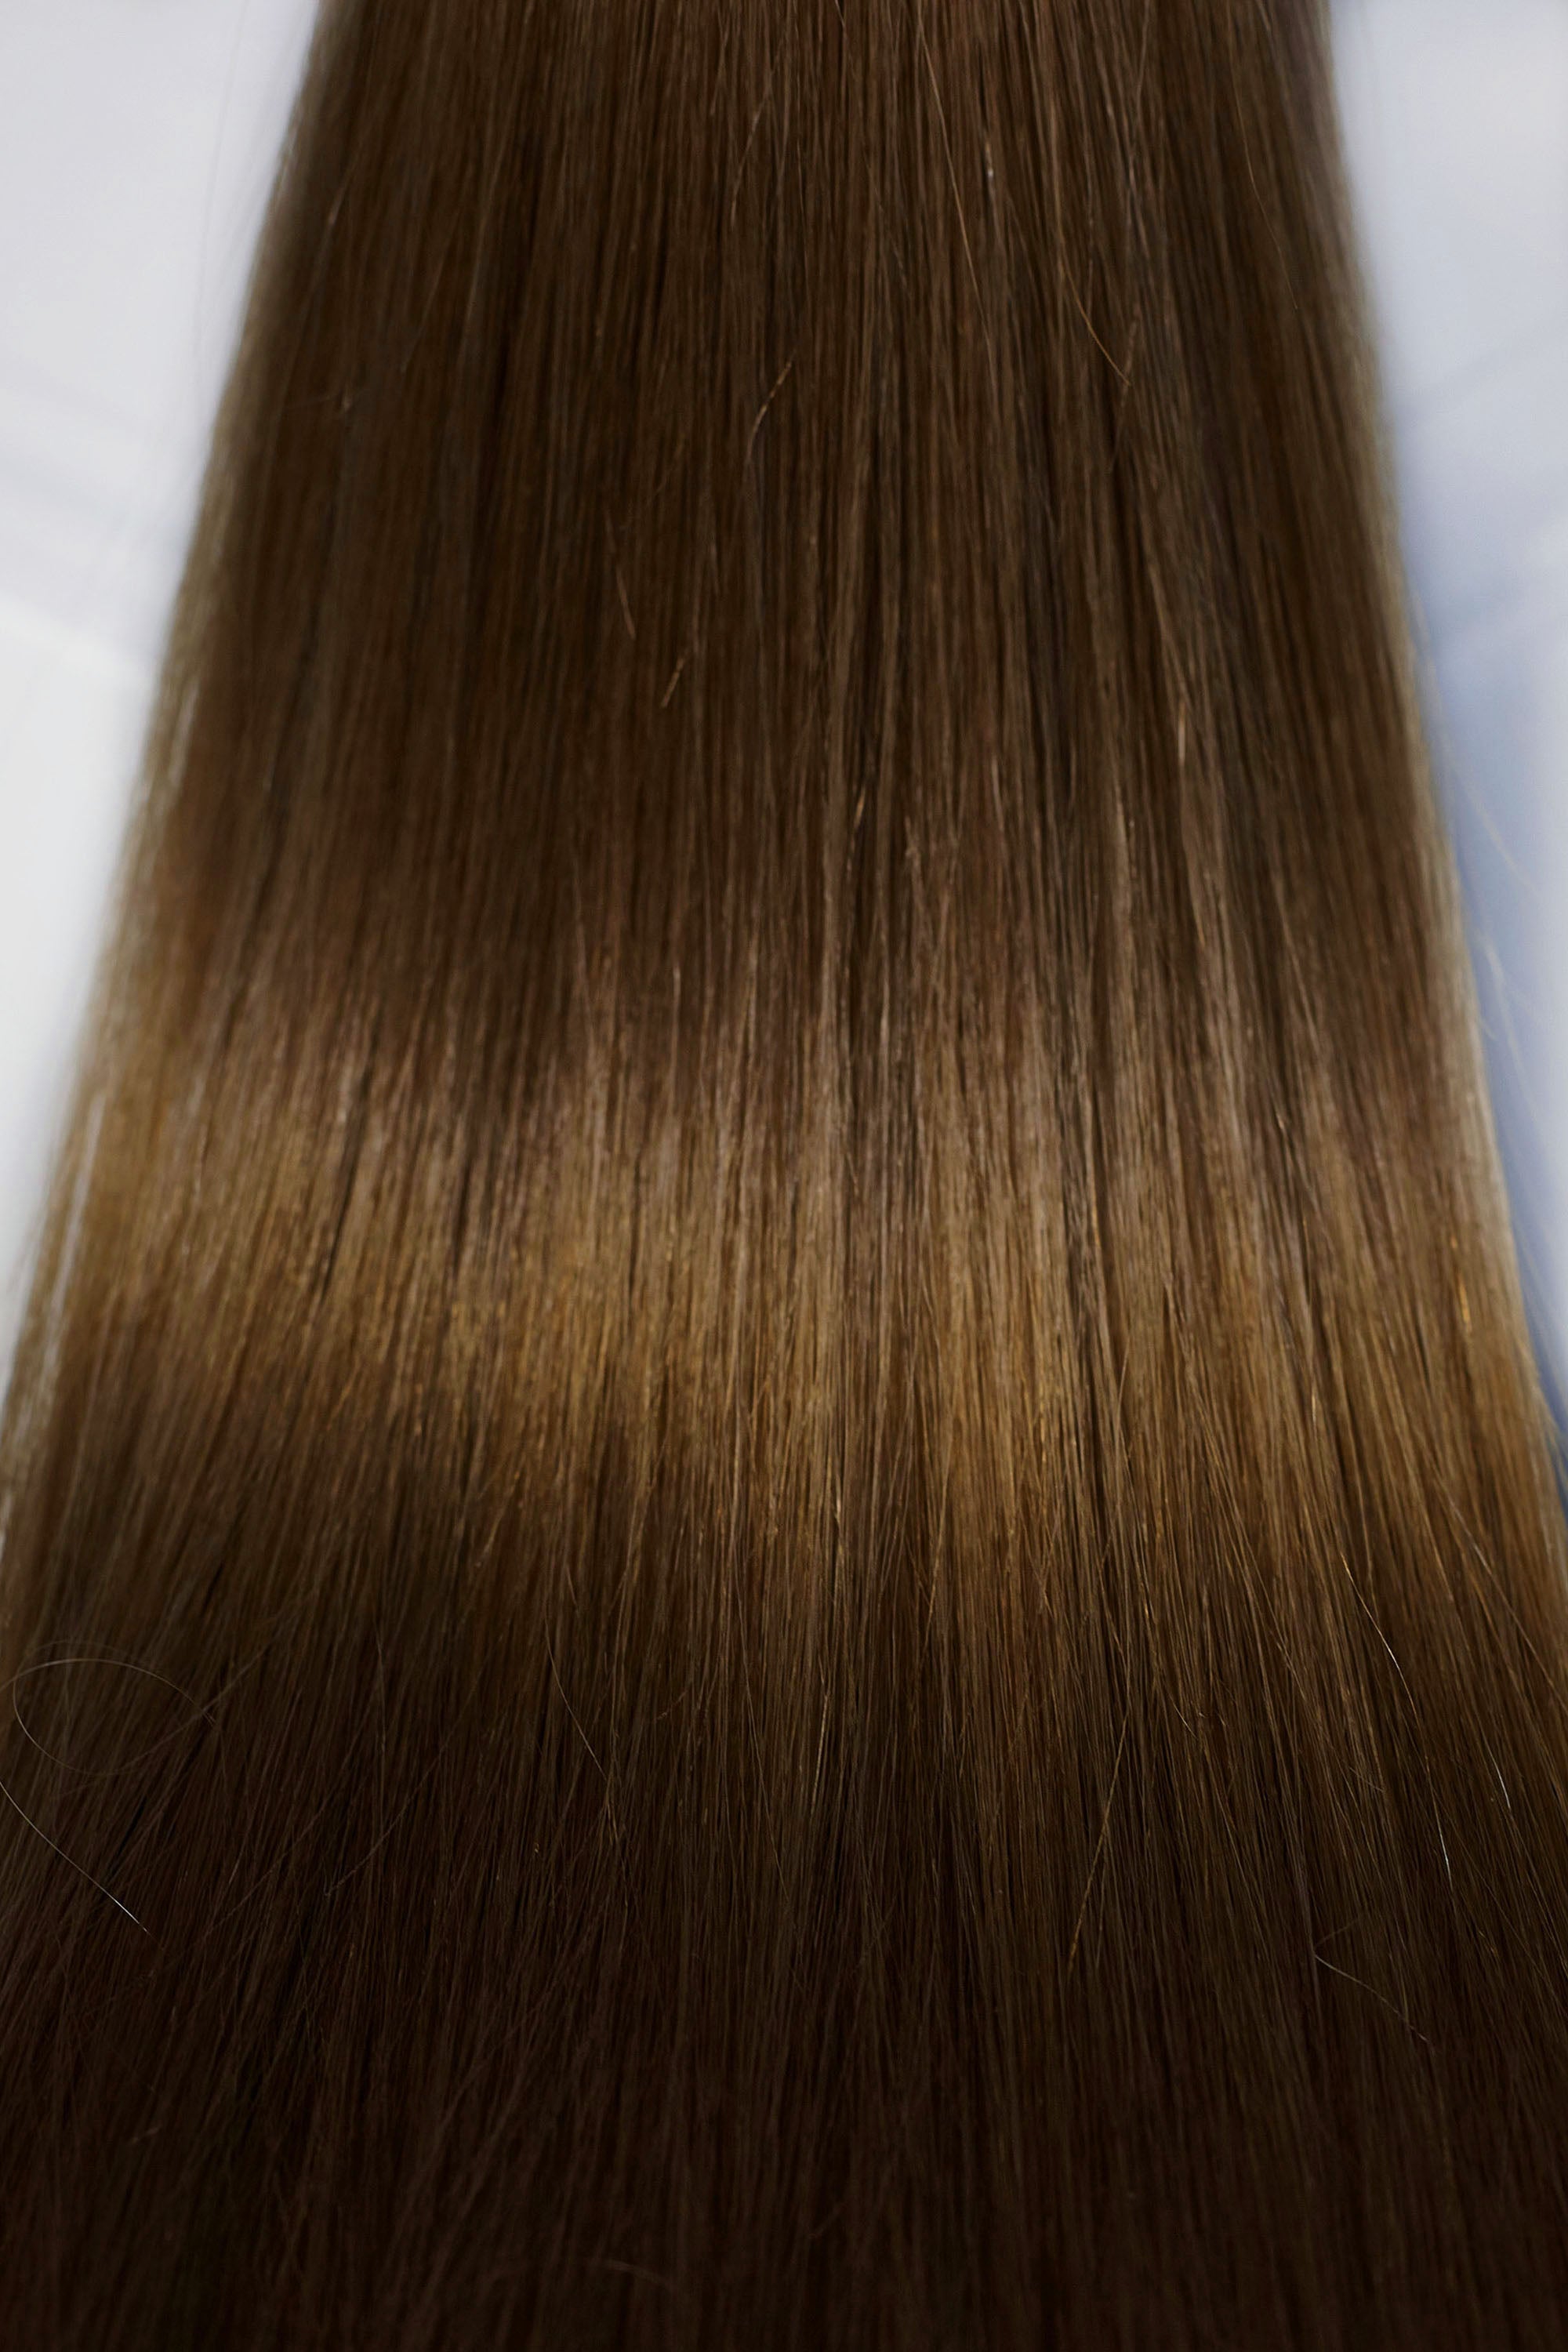 Behair professional Keratin Tip "Premium" 24" (60cm) Natural Straight Honey Walnut Brown #5 - 25g (Standart - 0.7g each pcs) hair extensions